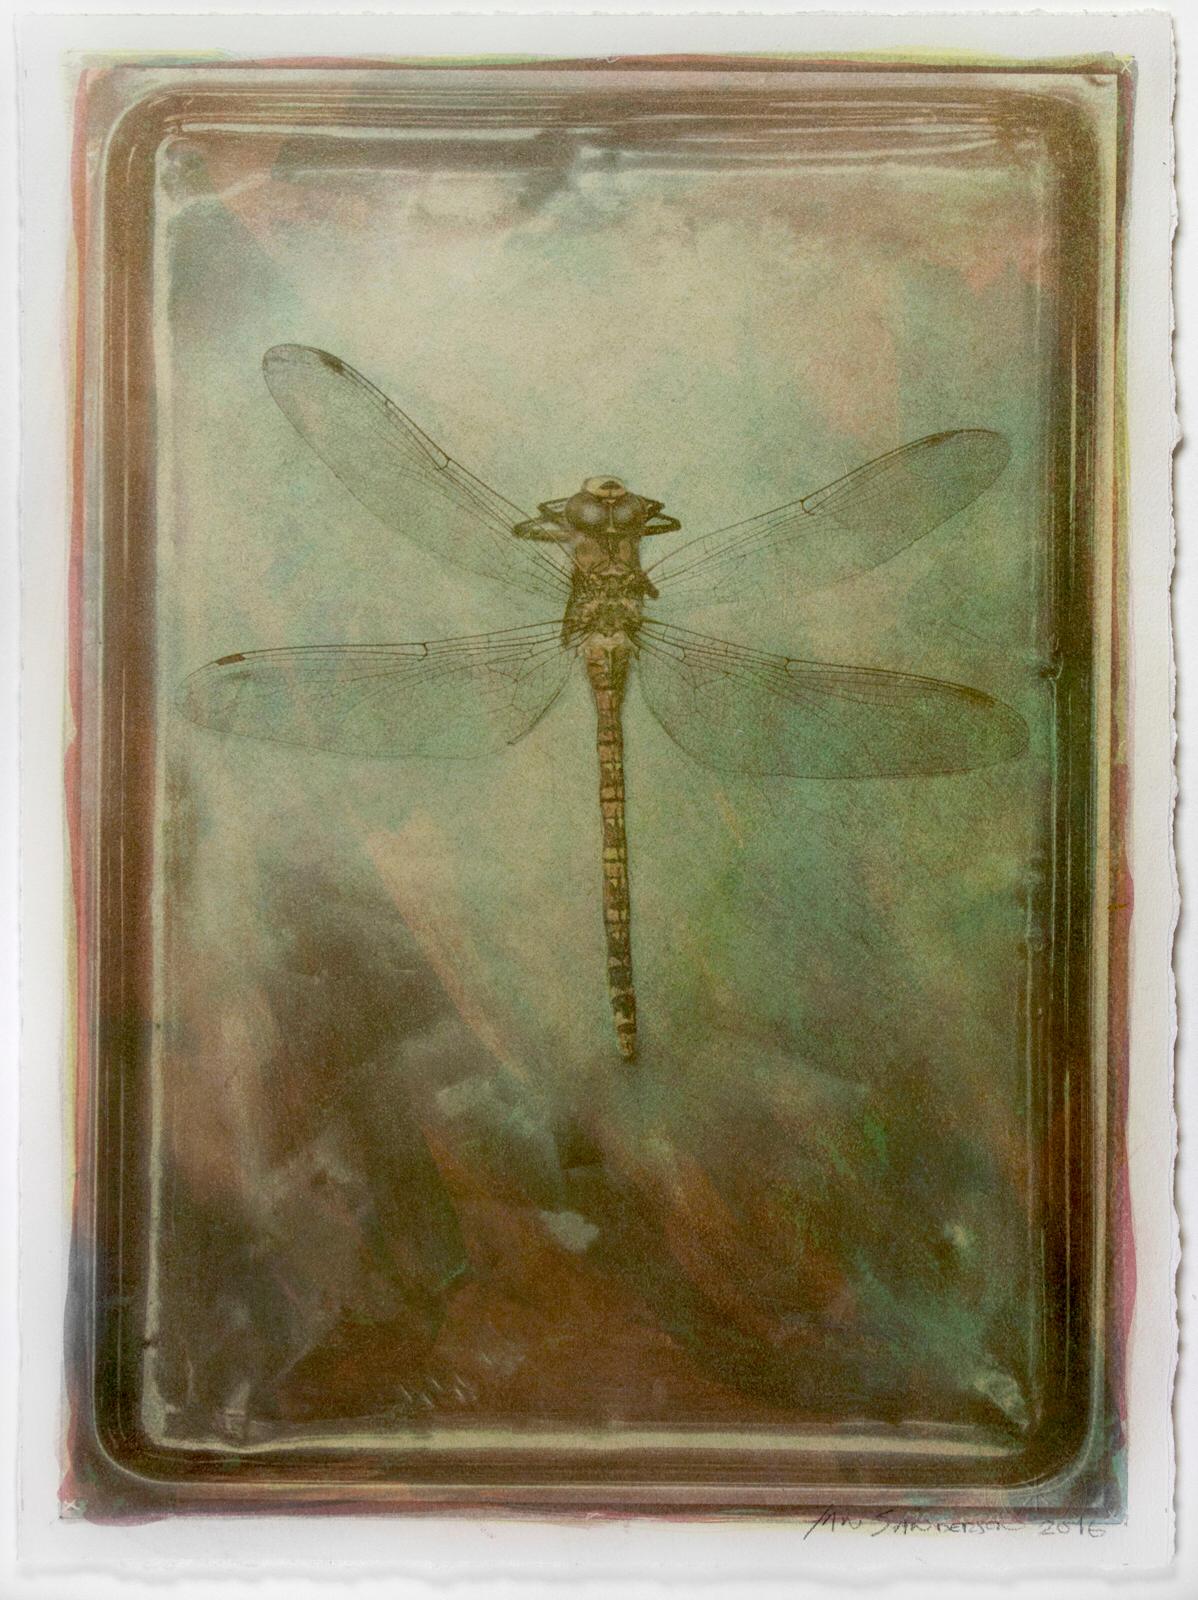 Ian Sanderson Still-Life Photograph – Dragonfly-Unique Gum Bichromate print(sensitised watercolour), Photographic print